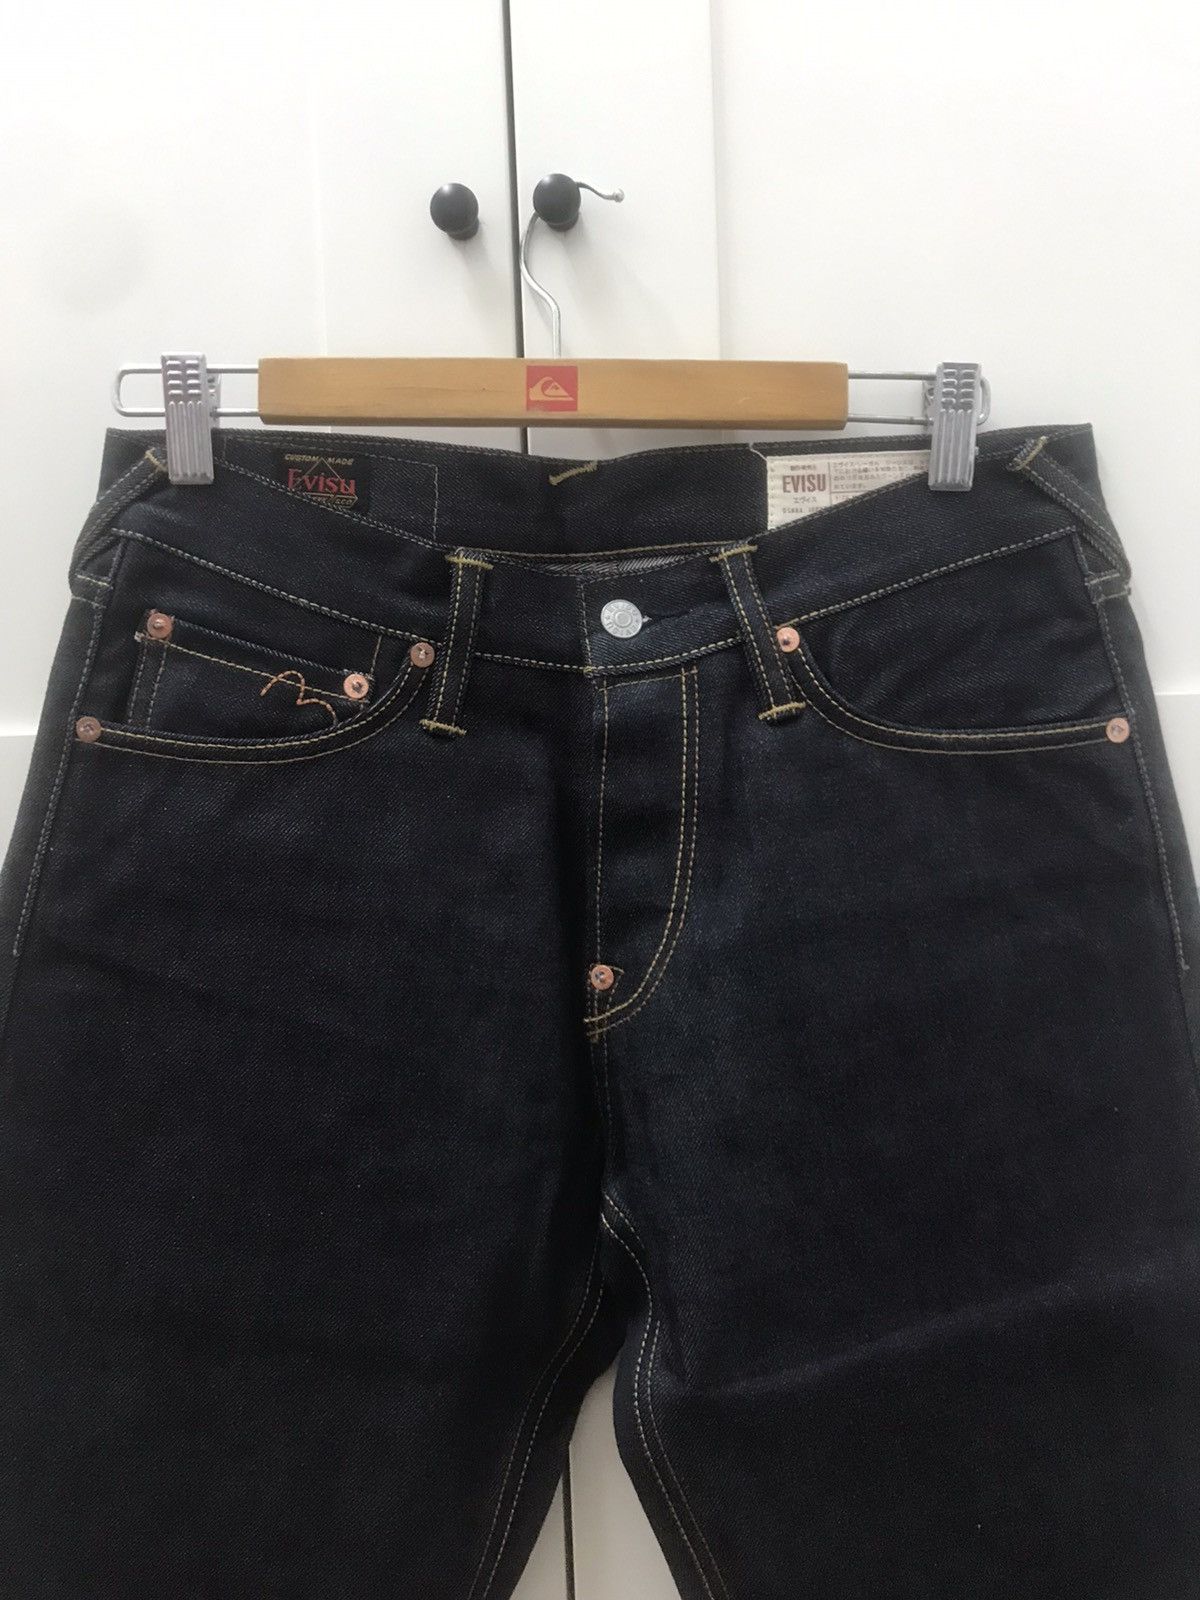 Evisu Limited edition evisu Jeans Size US 30 / EU 46 - 7 Thumbnail